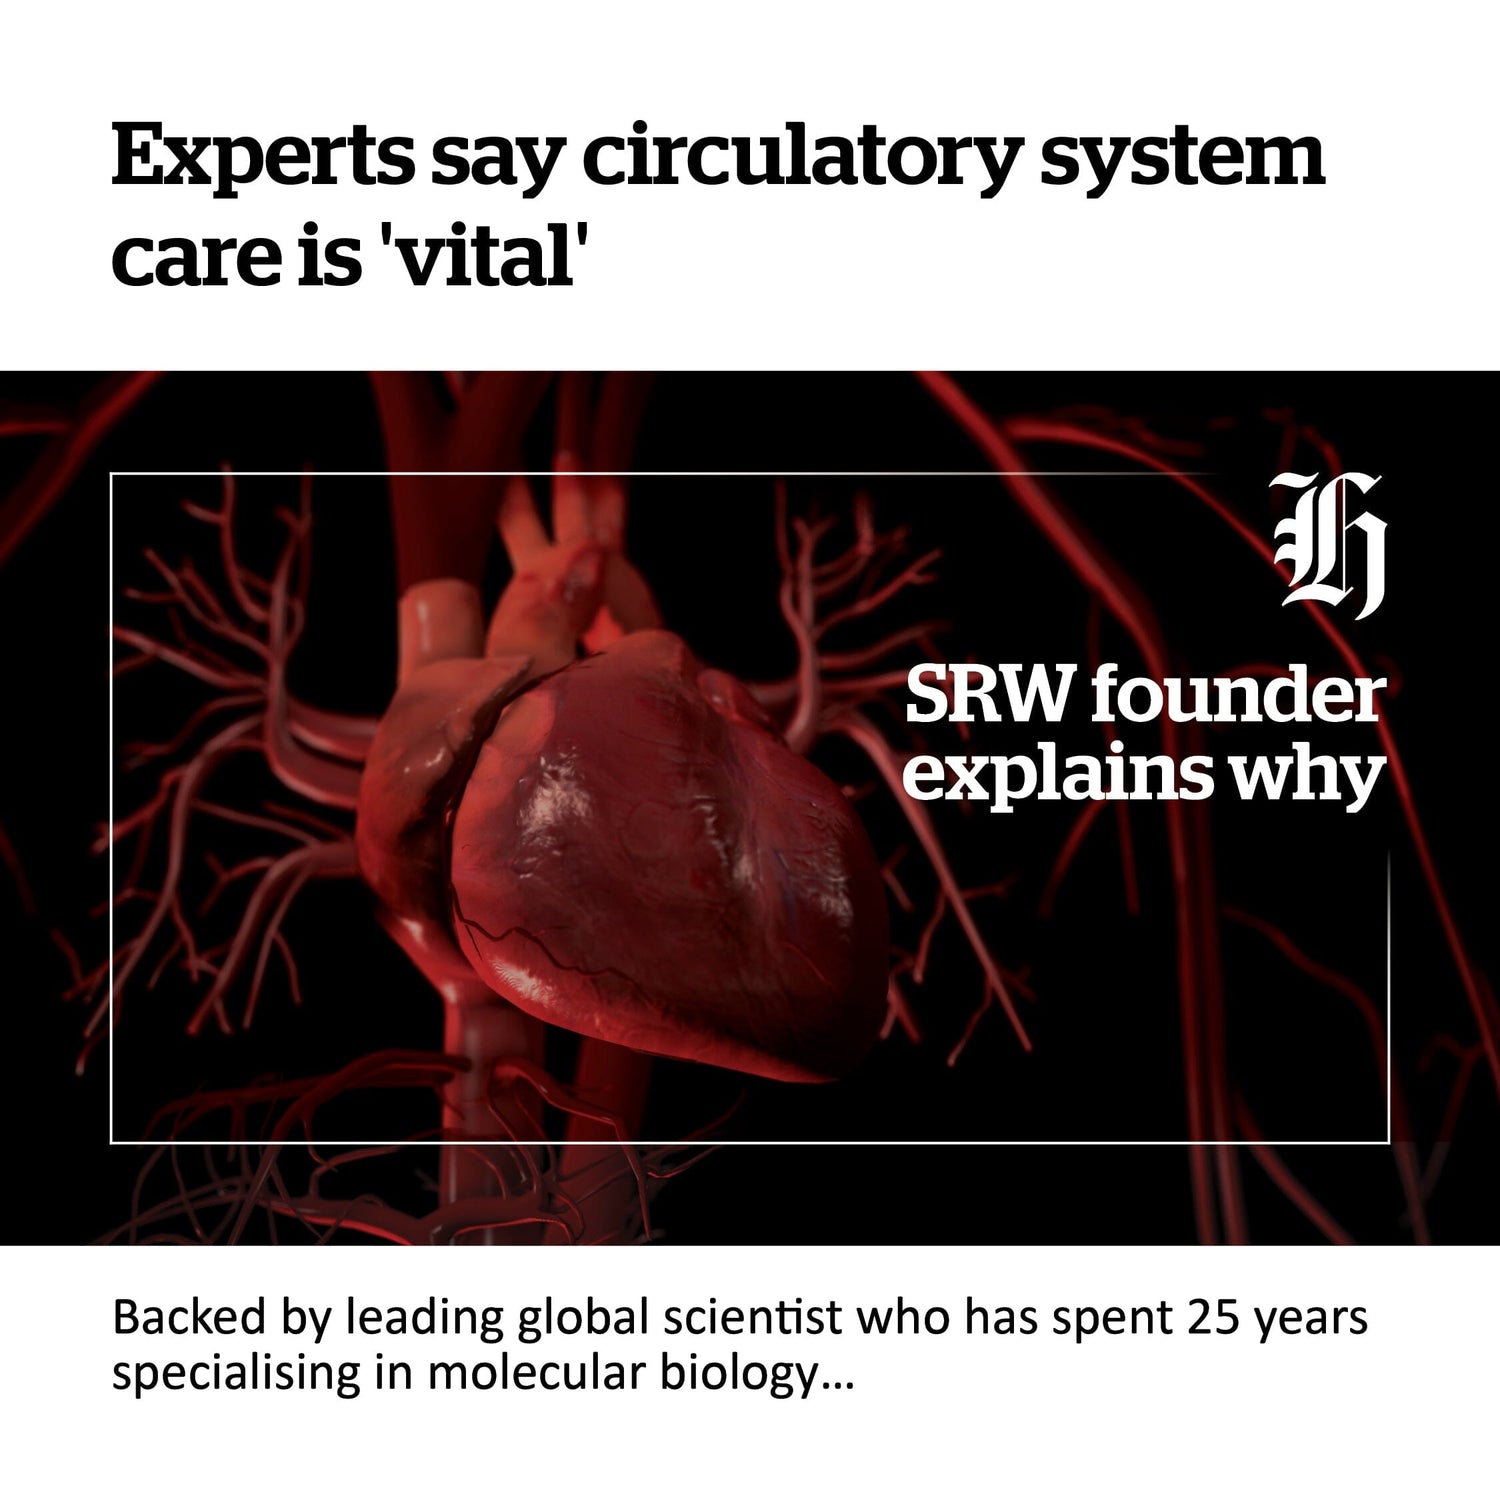 Circulatory system care "vital" [NZHERALD]